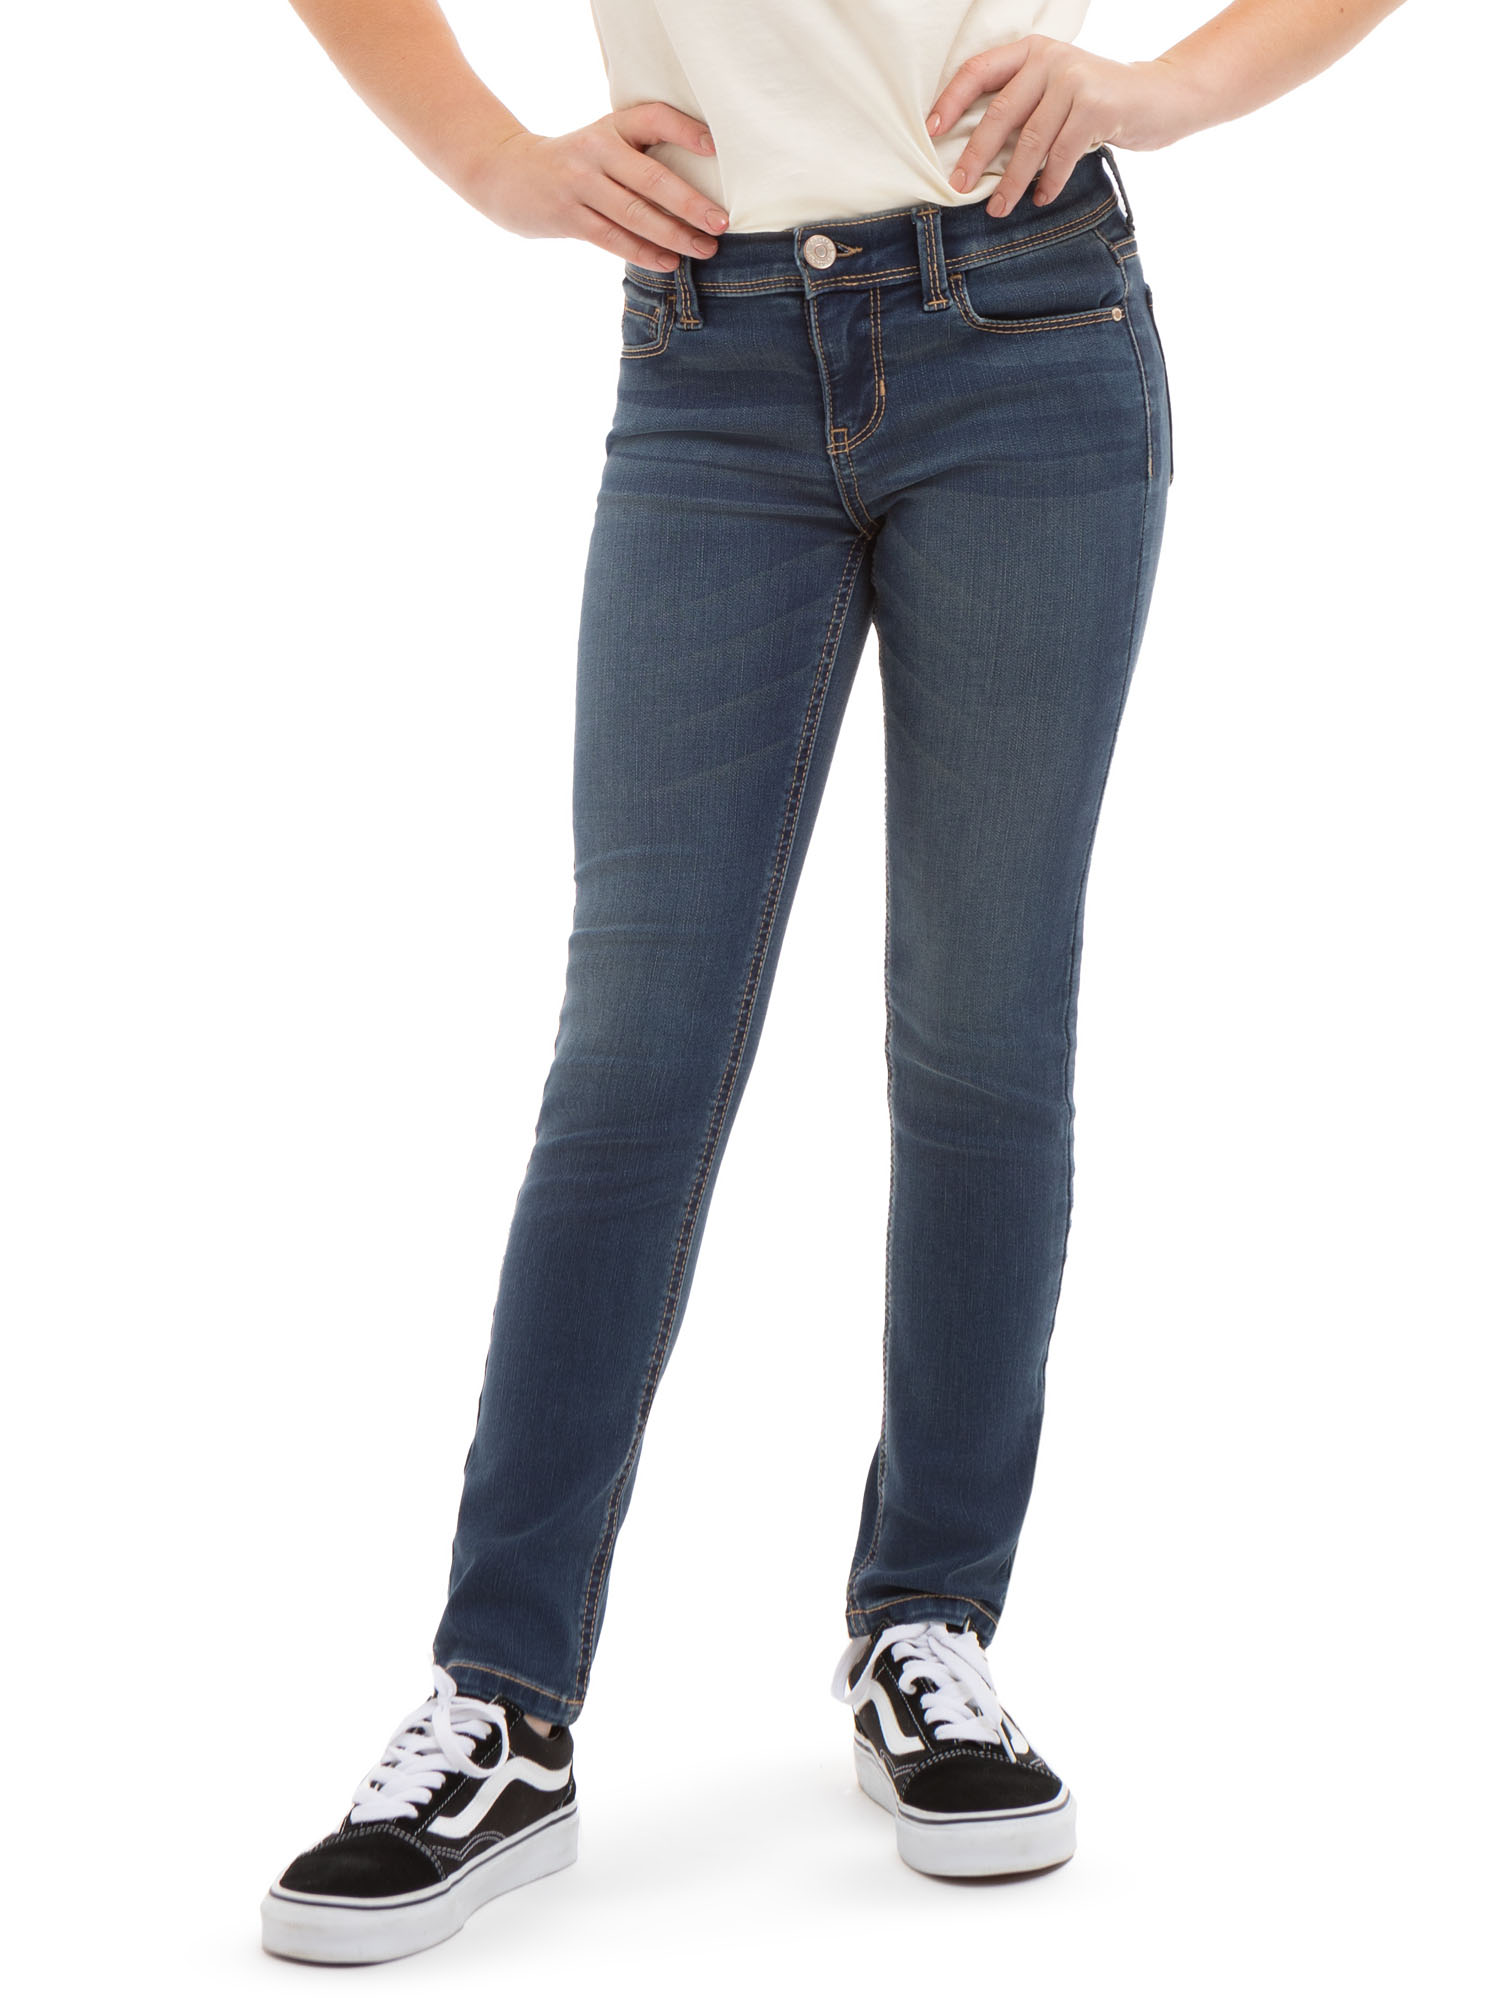 Jordache Girls Skinny Jeans, Sizes 5-18 - image 1 of 5